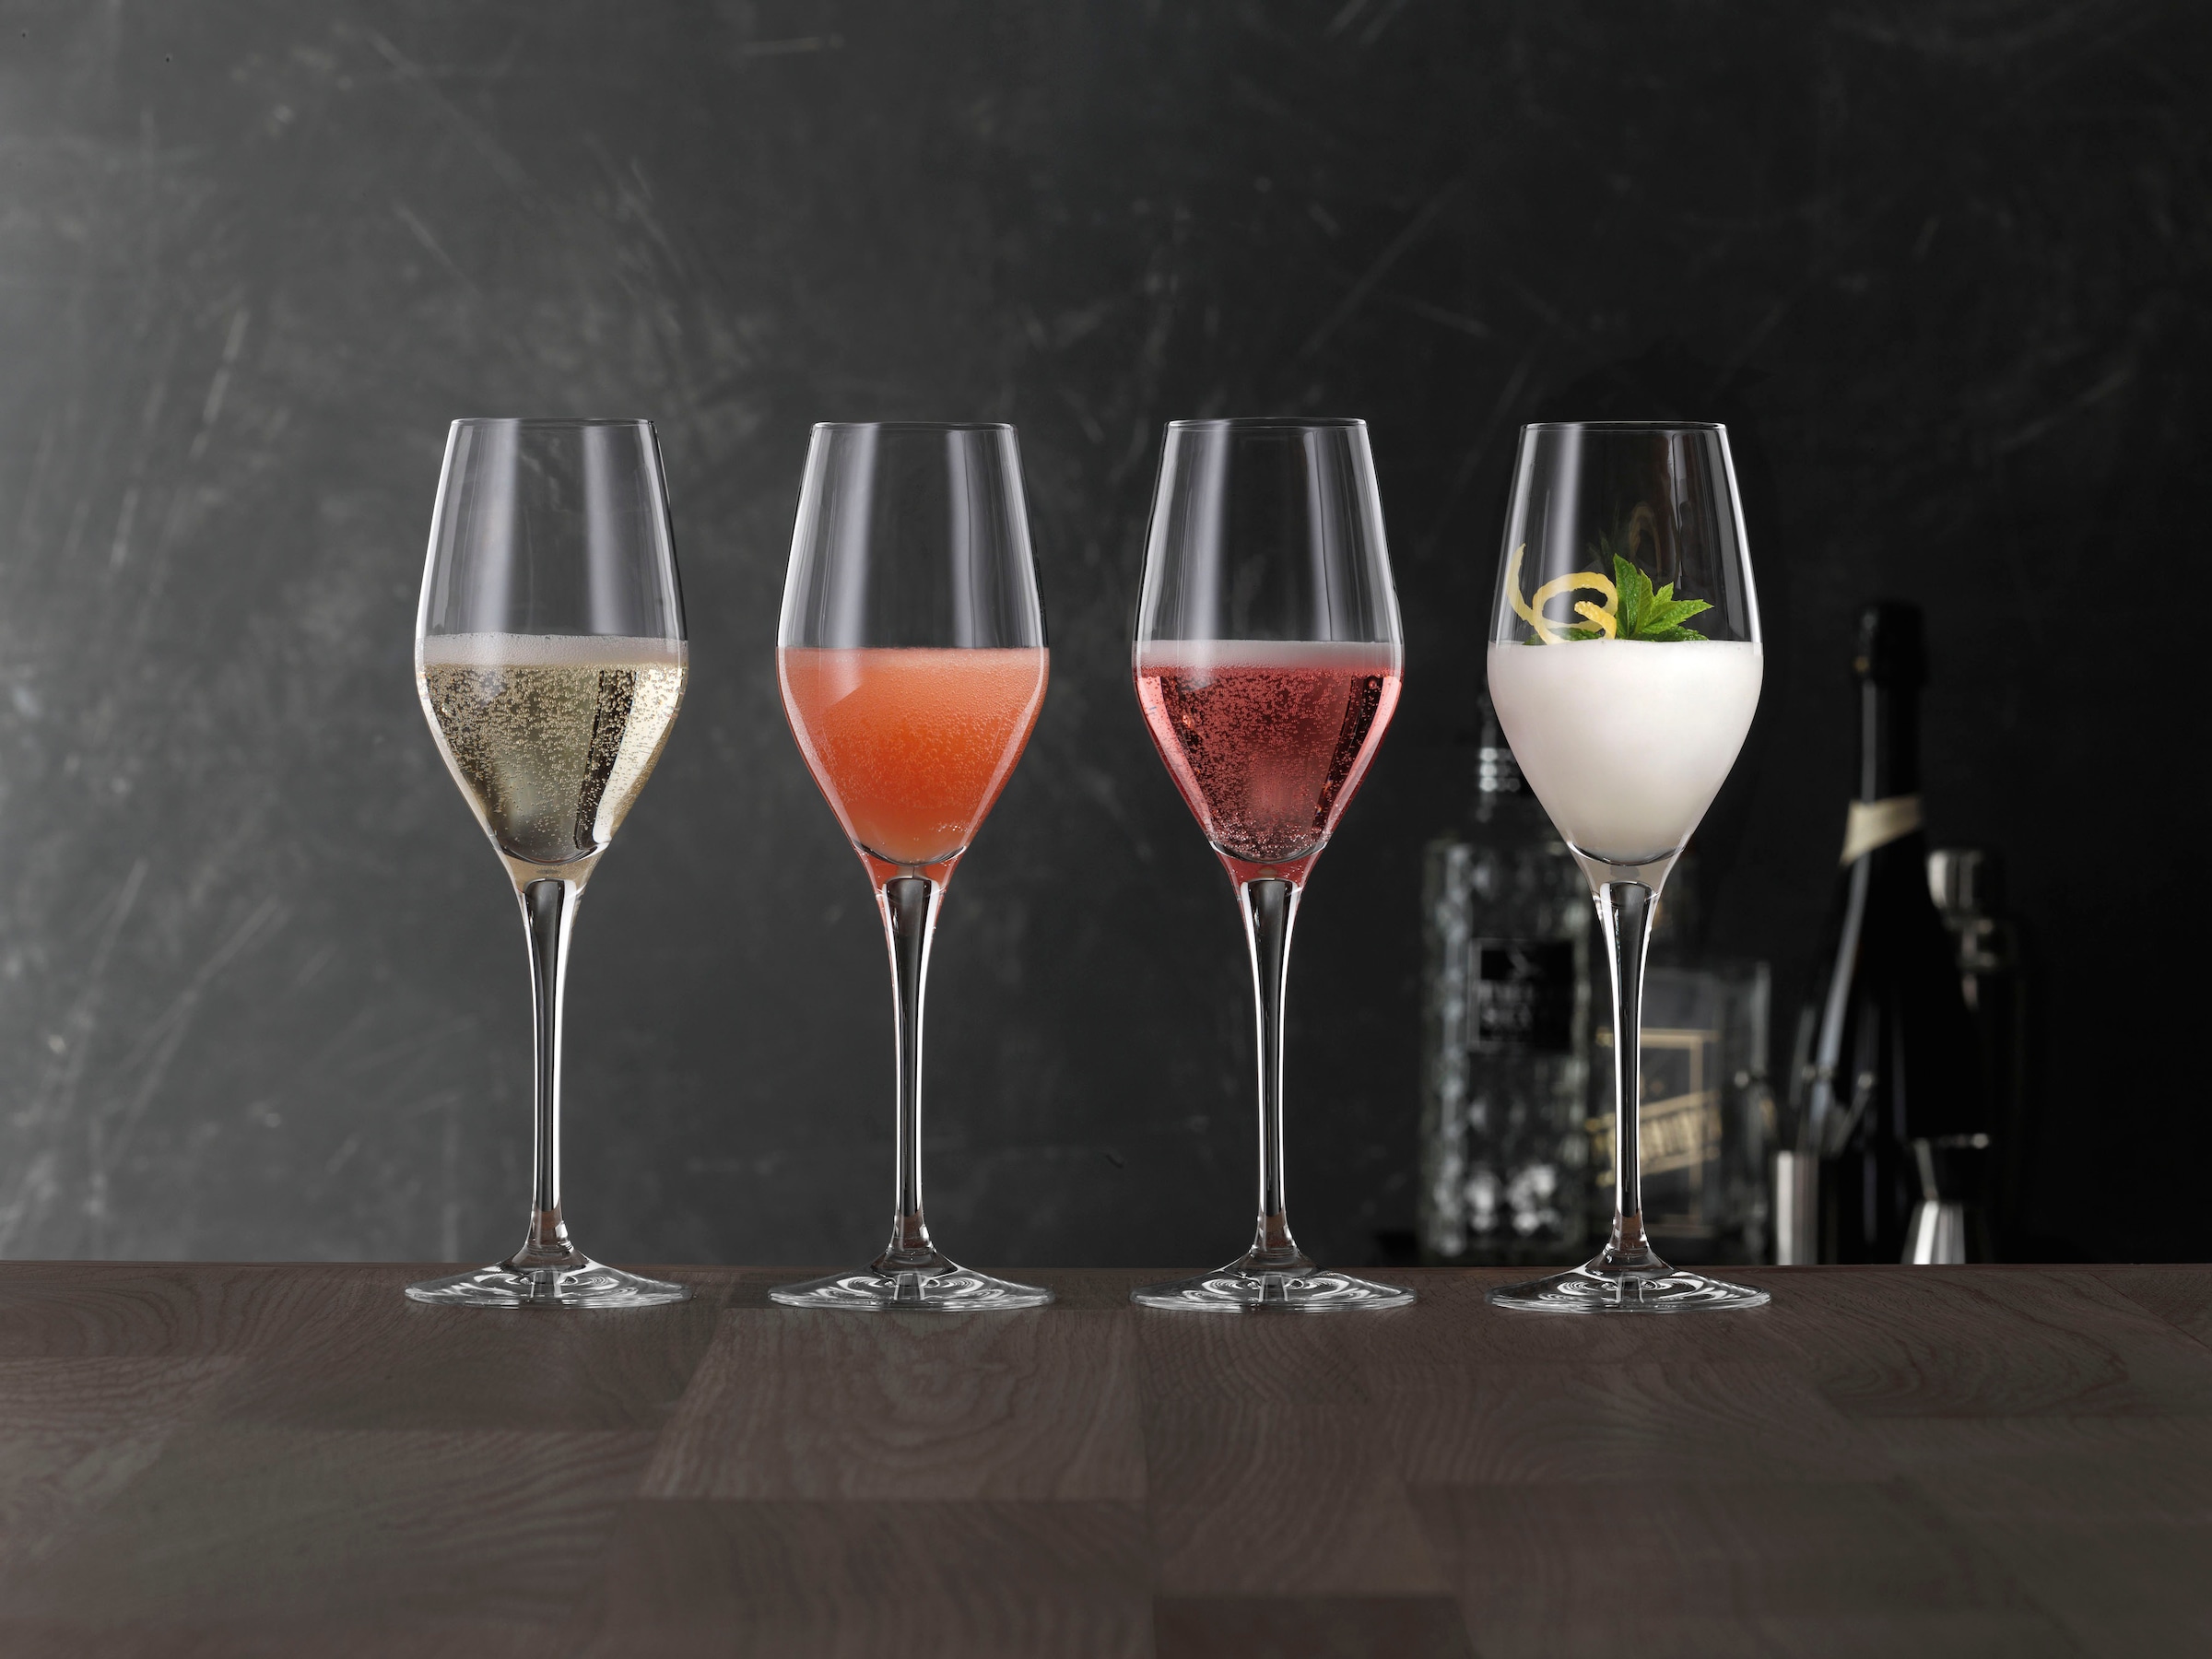 SPIEGELAU Champagnerglas »Special Glasses«, (Set, 4 tlg., Set bestehend aus 4 Gläsern), 270 ml, 4-teilig